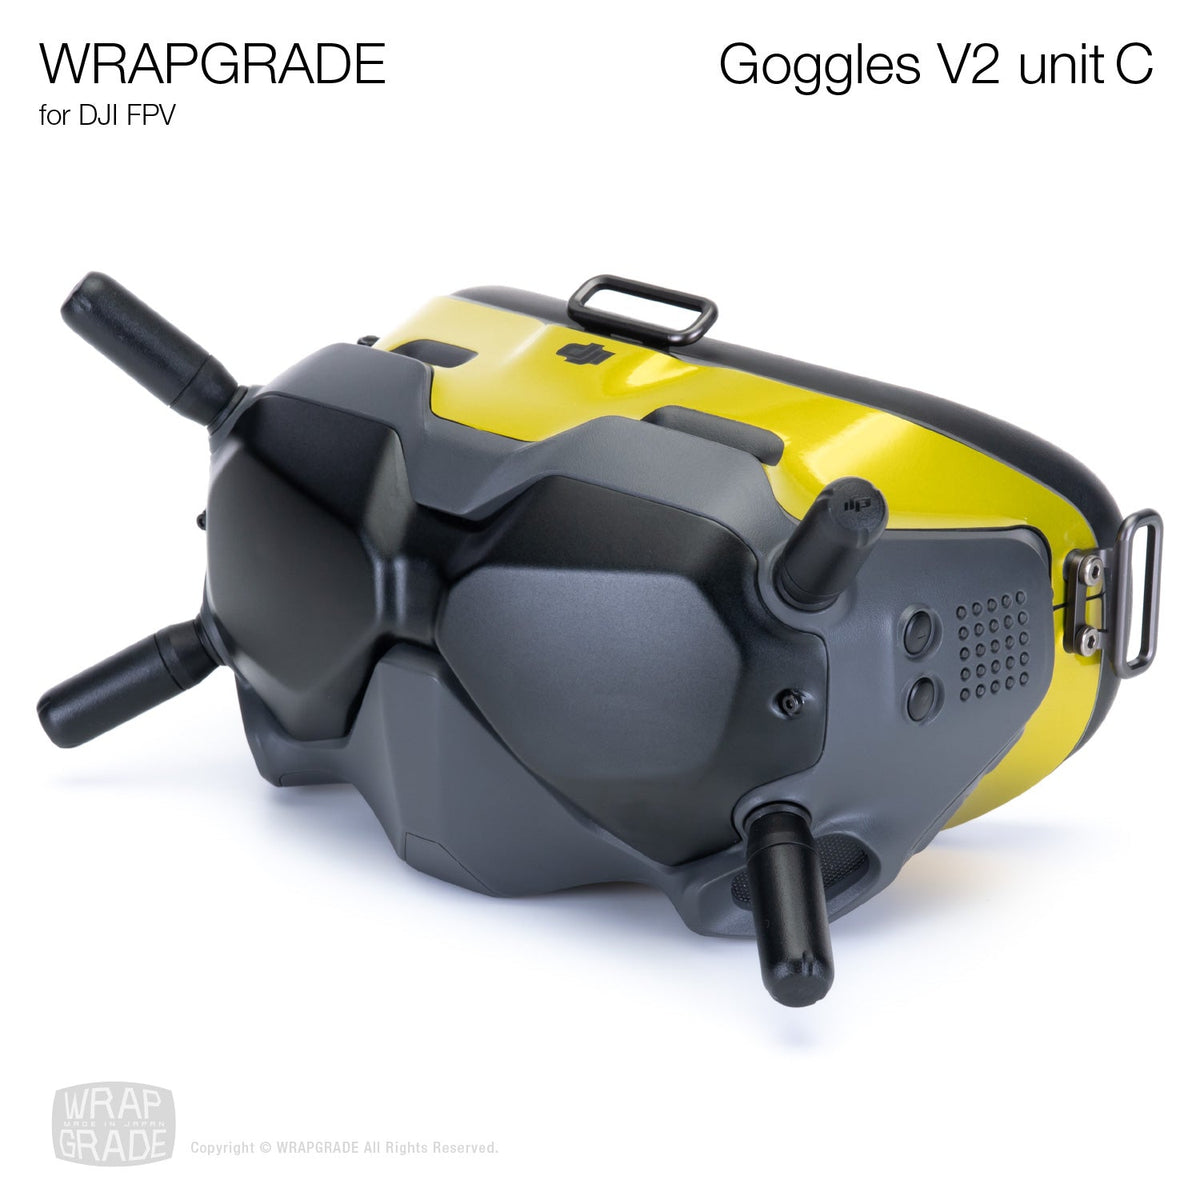 Wrapgrade for DJI FPV | Goggles V2 Unit C